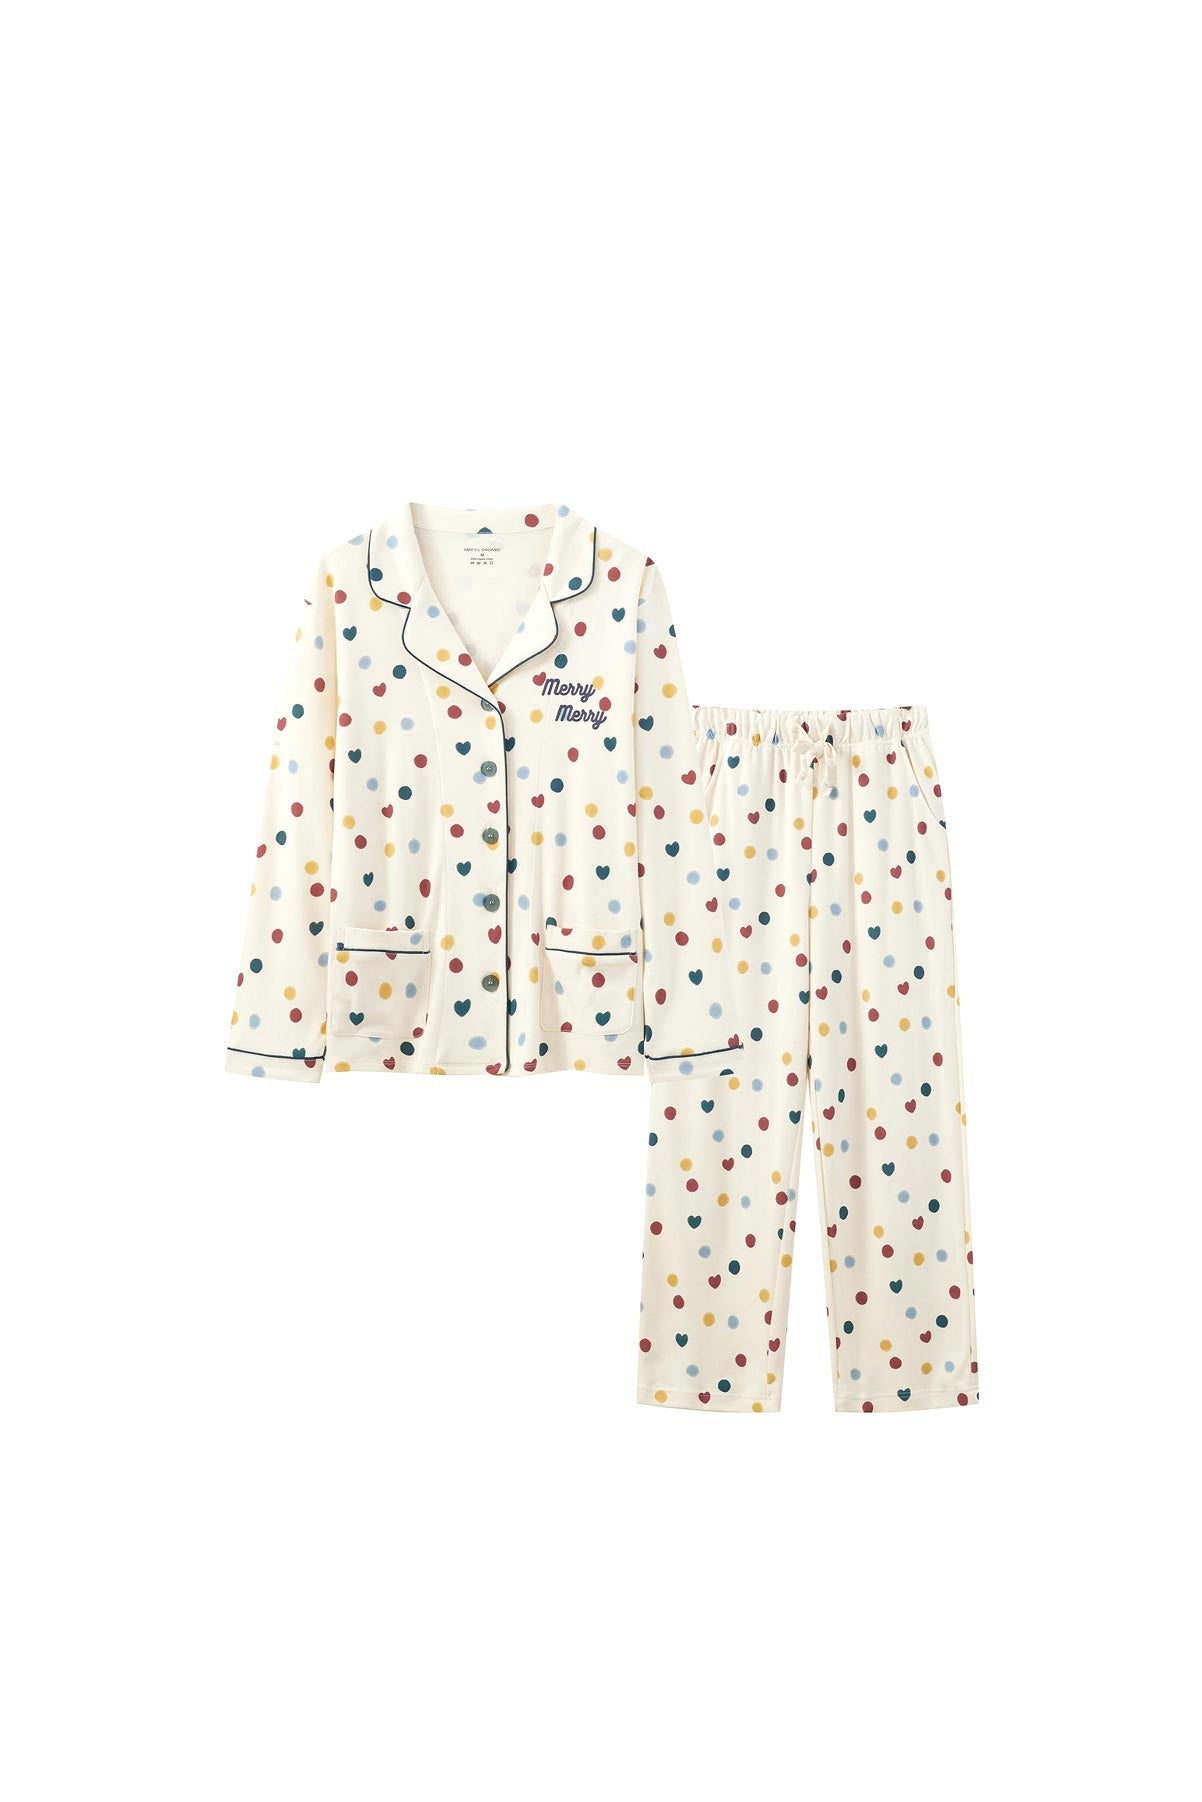 image for Women Organic Long-sleeve PJ Set-Merry Dots